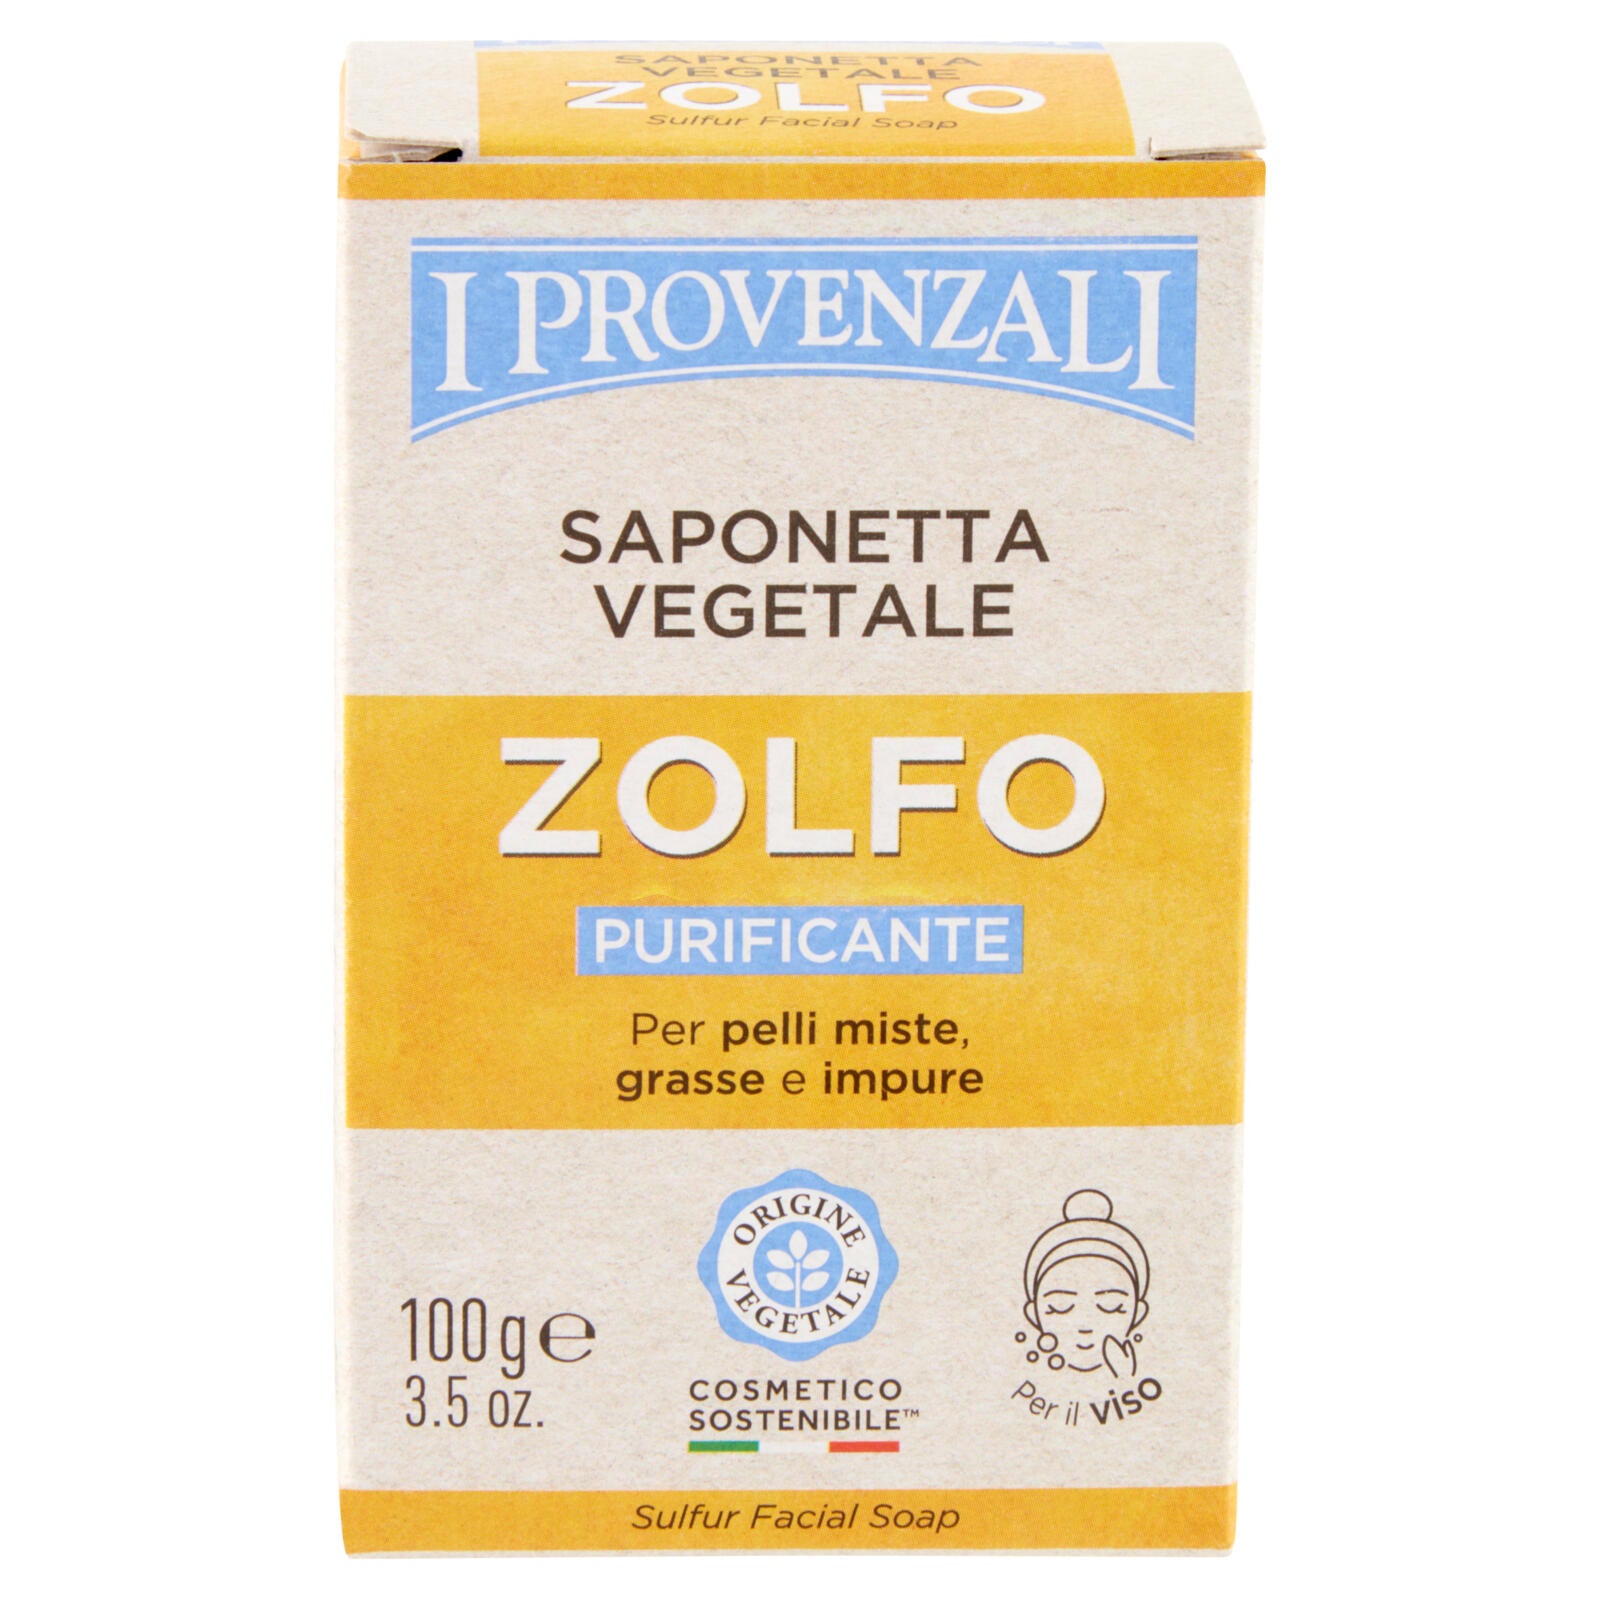 I Provenzali Saponetta Vegetale Zolfo Purificante 100 g